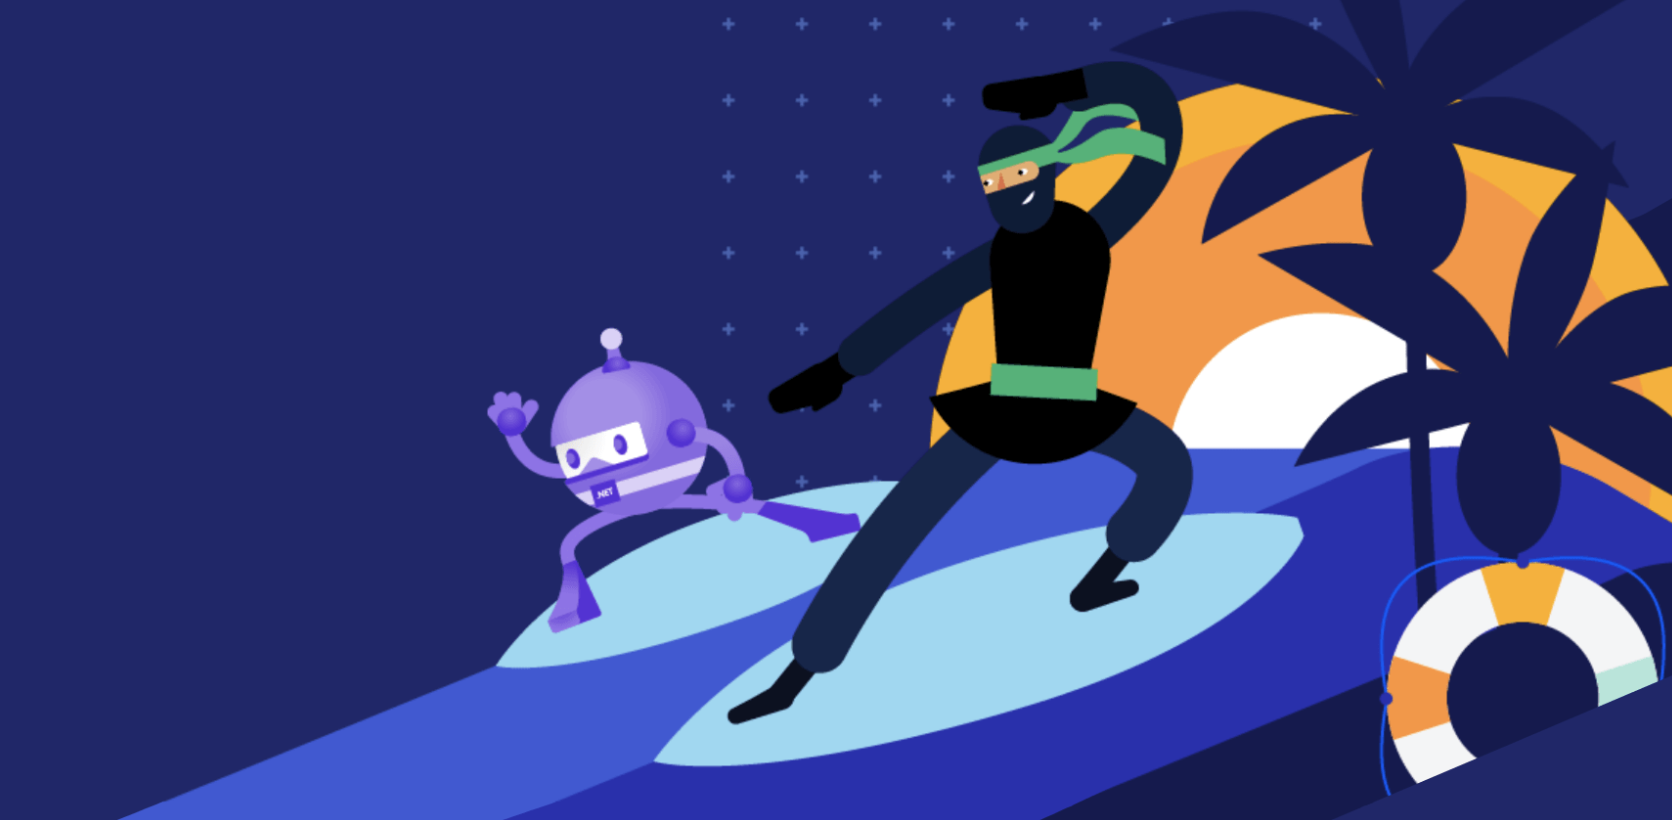 illustration of the Telerik Ninja surfing with .NET MAUI mascot